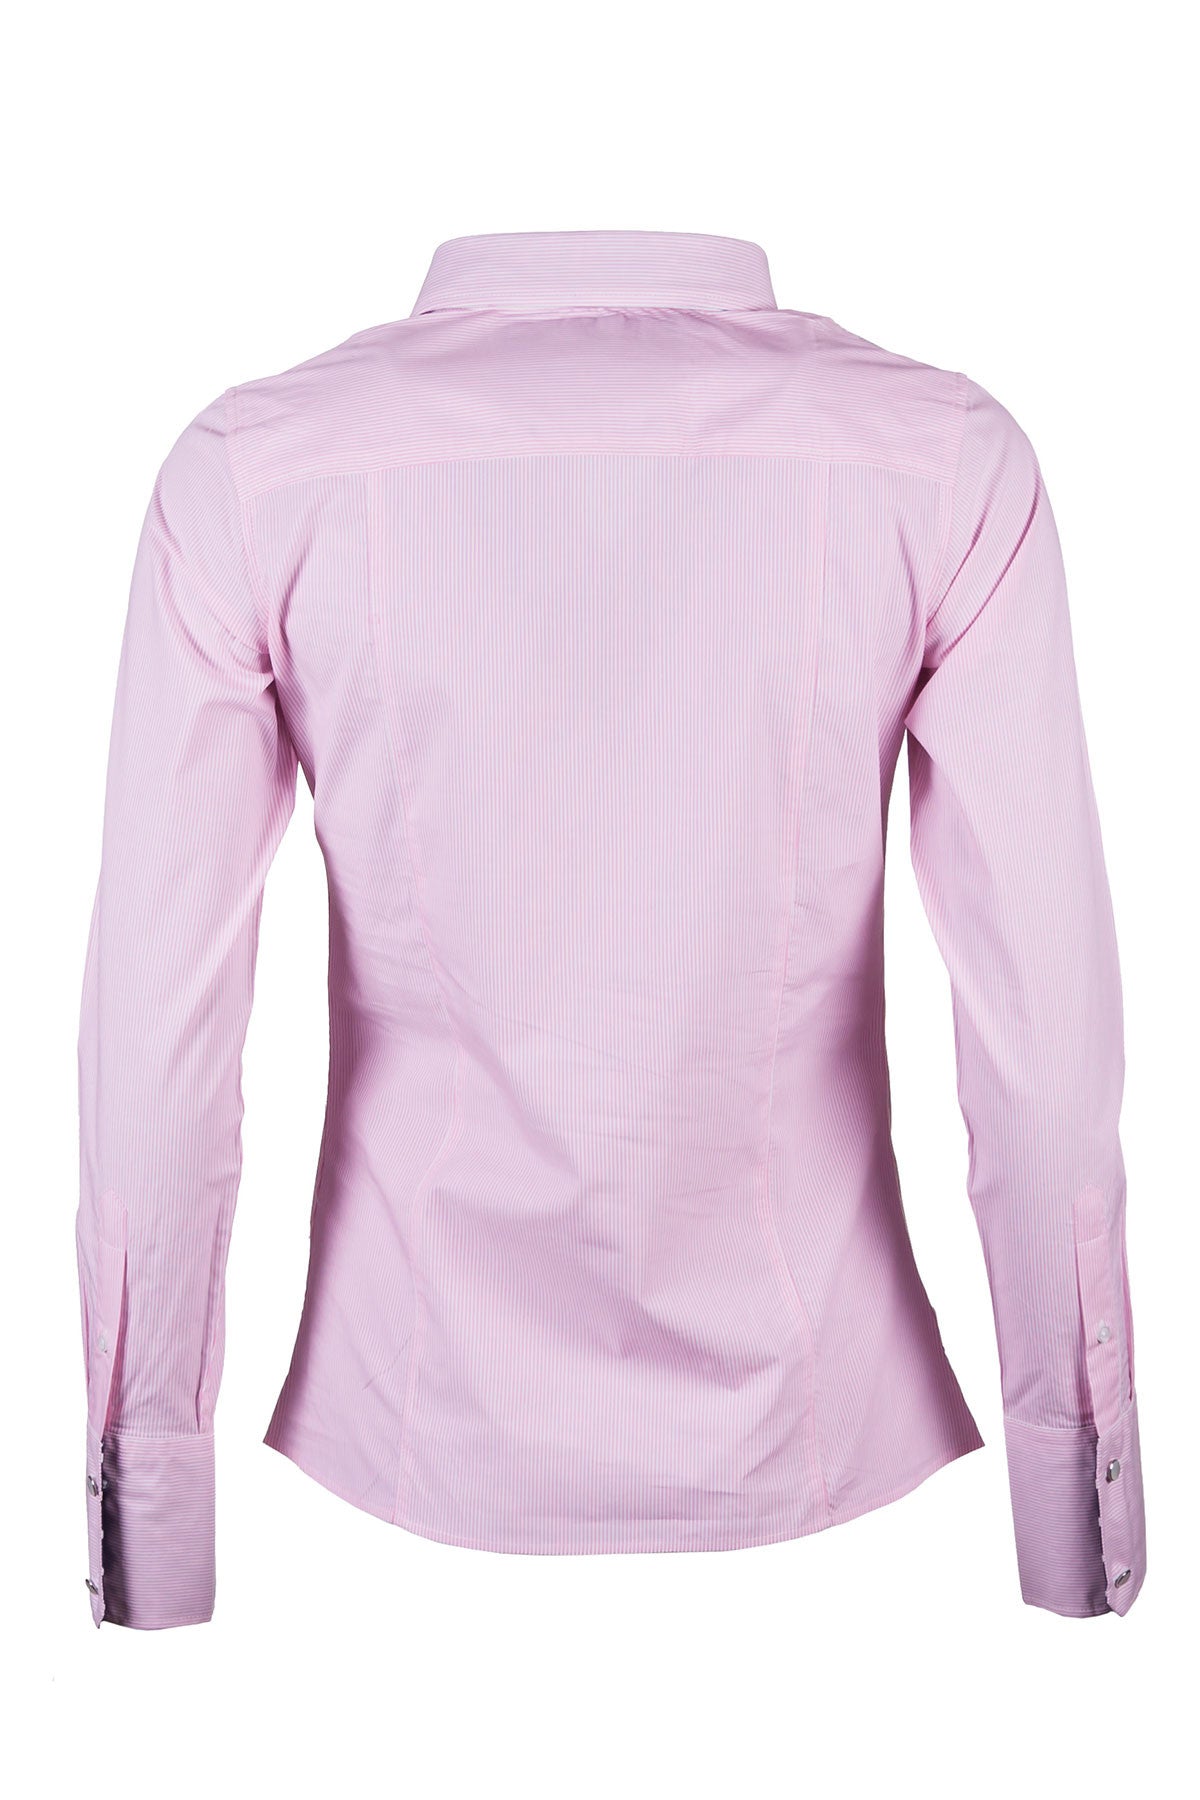 Classic 100% Cotton Oxford Dress Shirts UK | Rydale